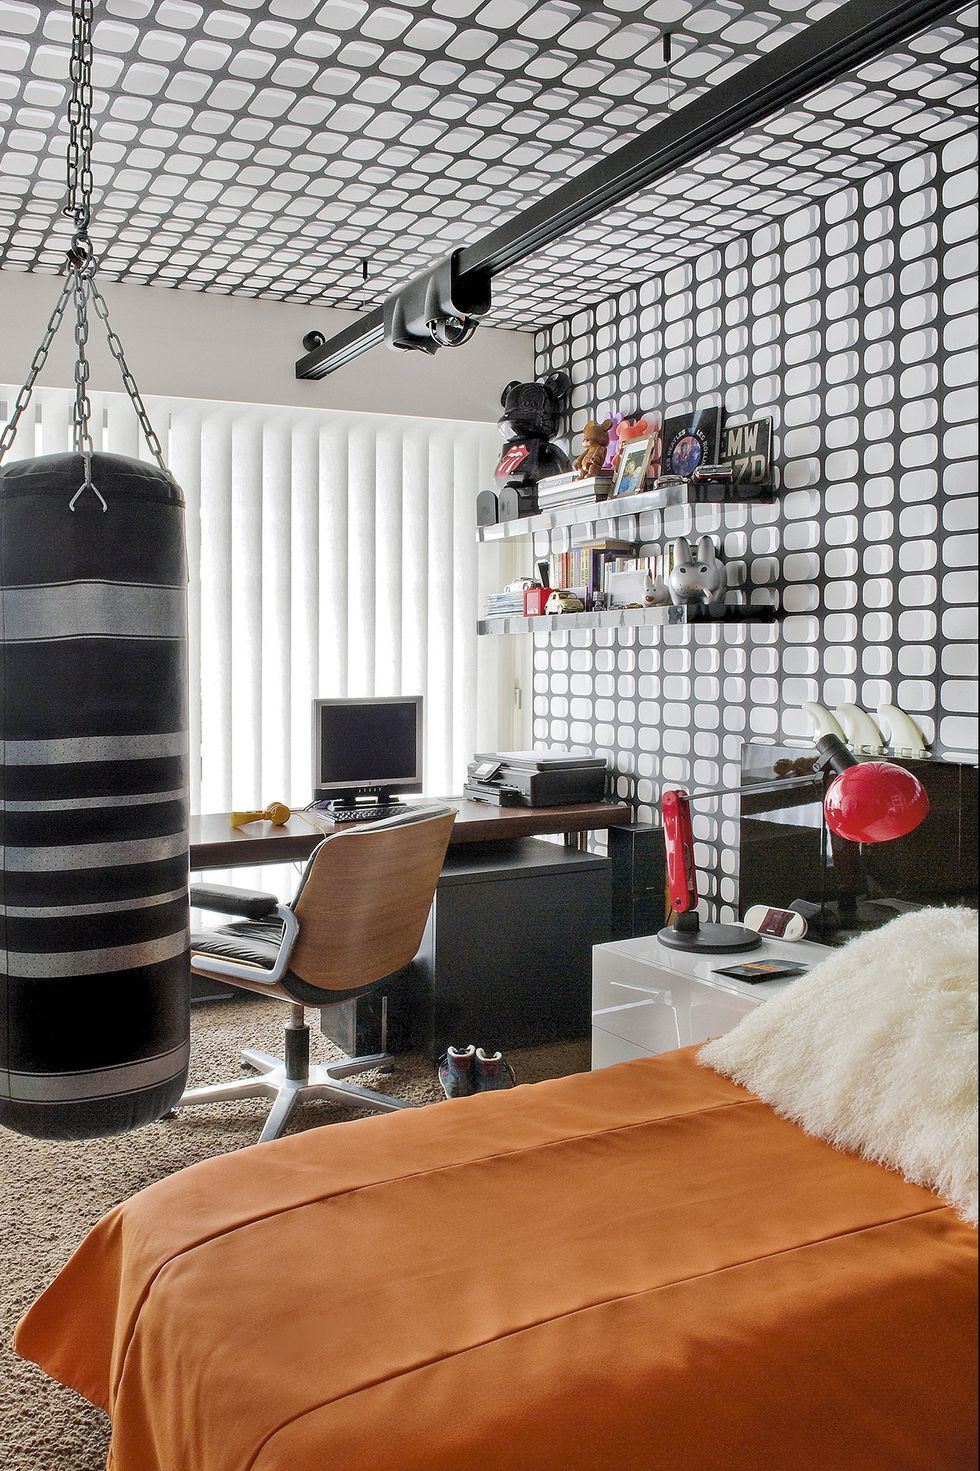 20 Stylish Teen Room Ideas Creative, Best Bedroom Furniture For Teenage Girl